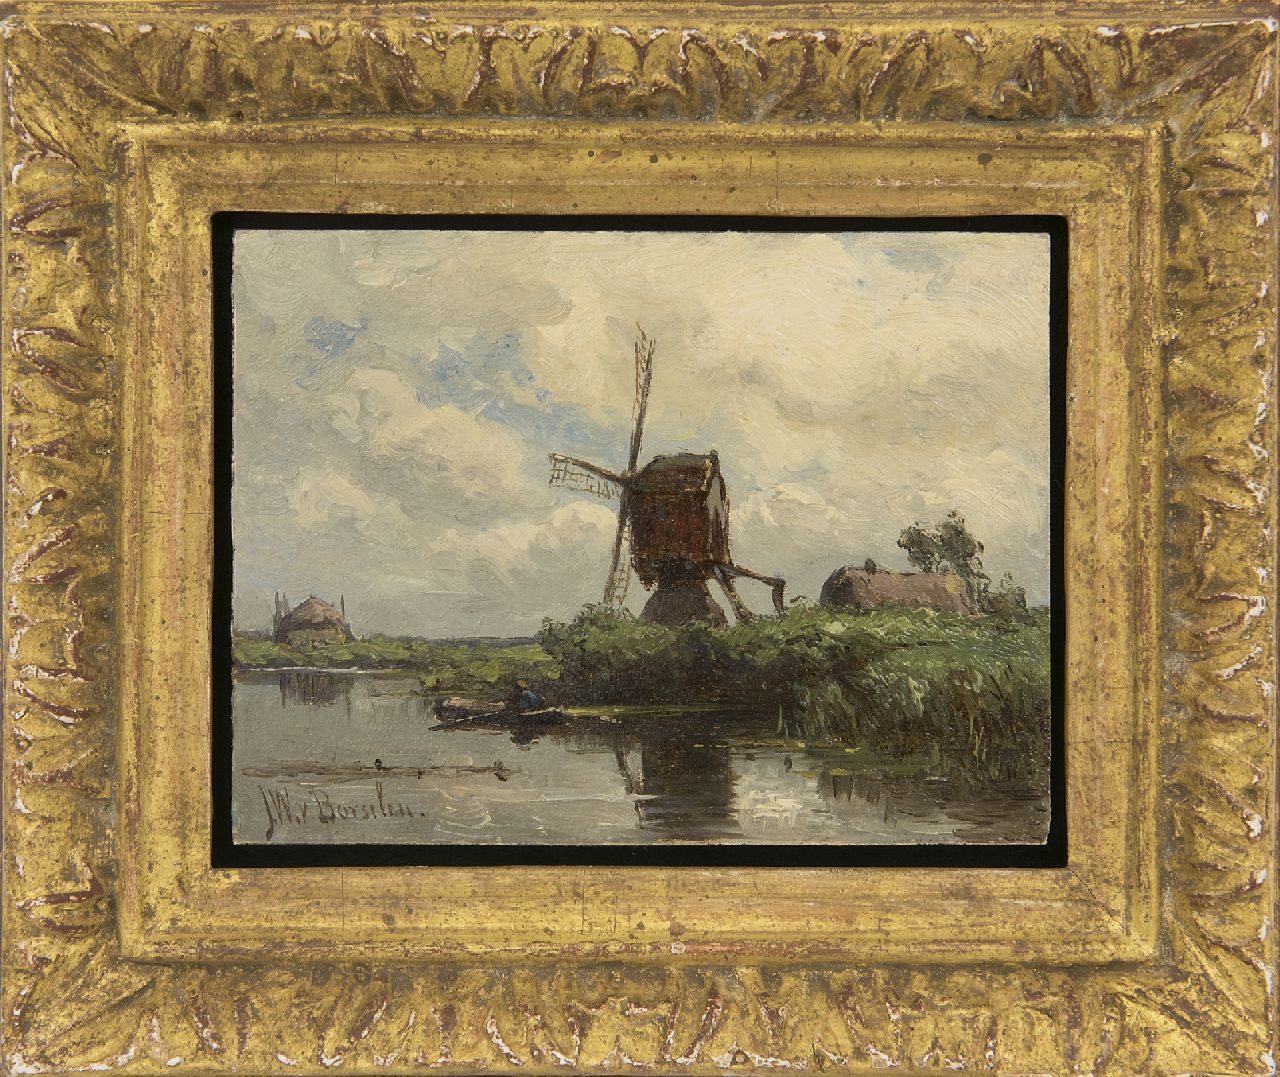 Borselen J.W. van | Jan Willem van Borselen, A windmill by the water, oil on panel 9.0 x 11.9 cm, signed l.l.